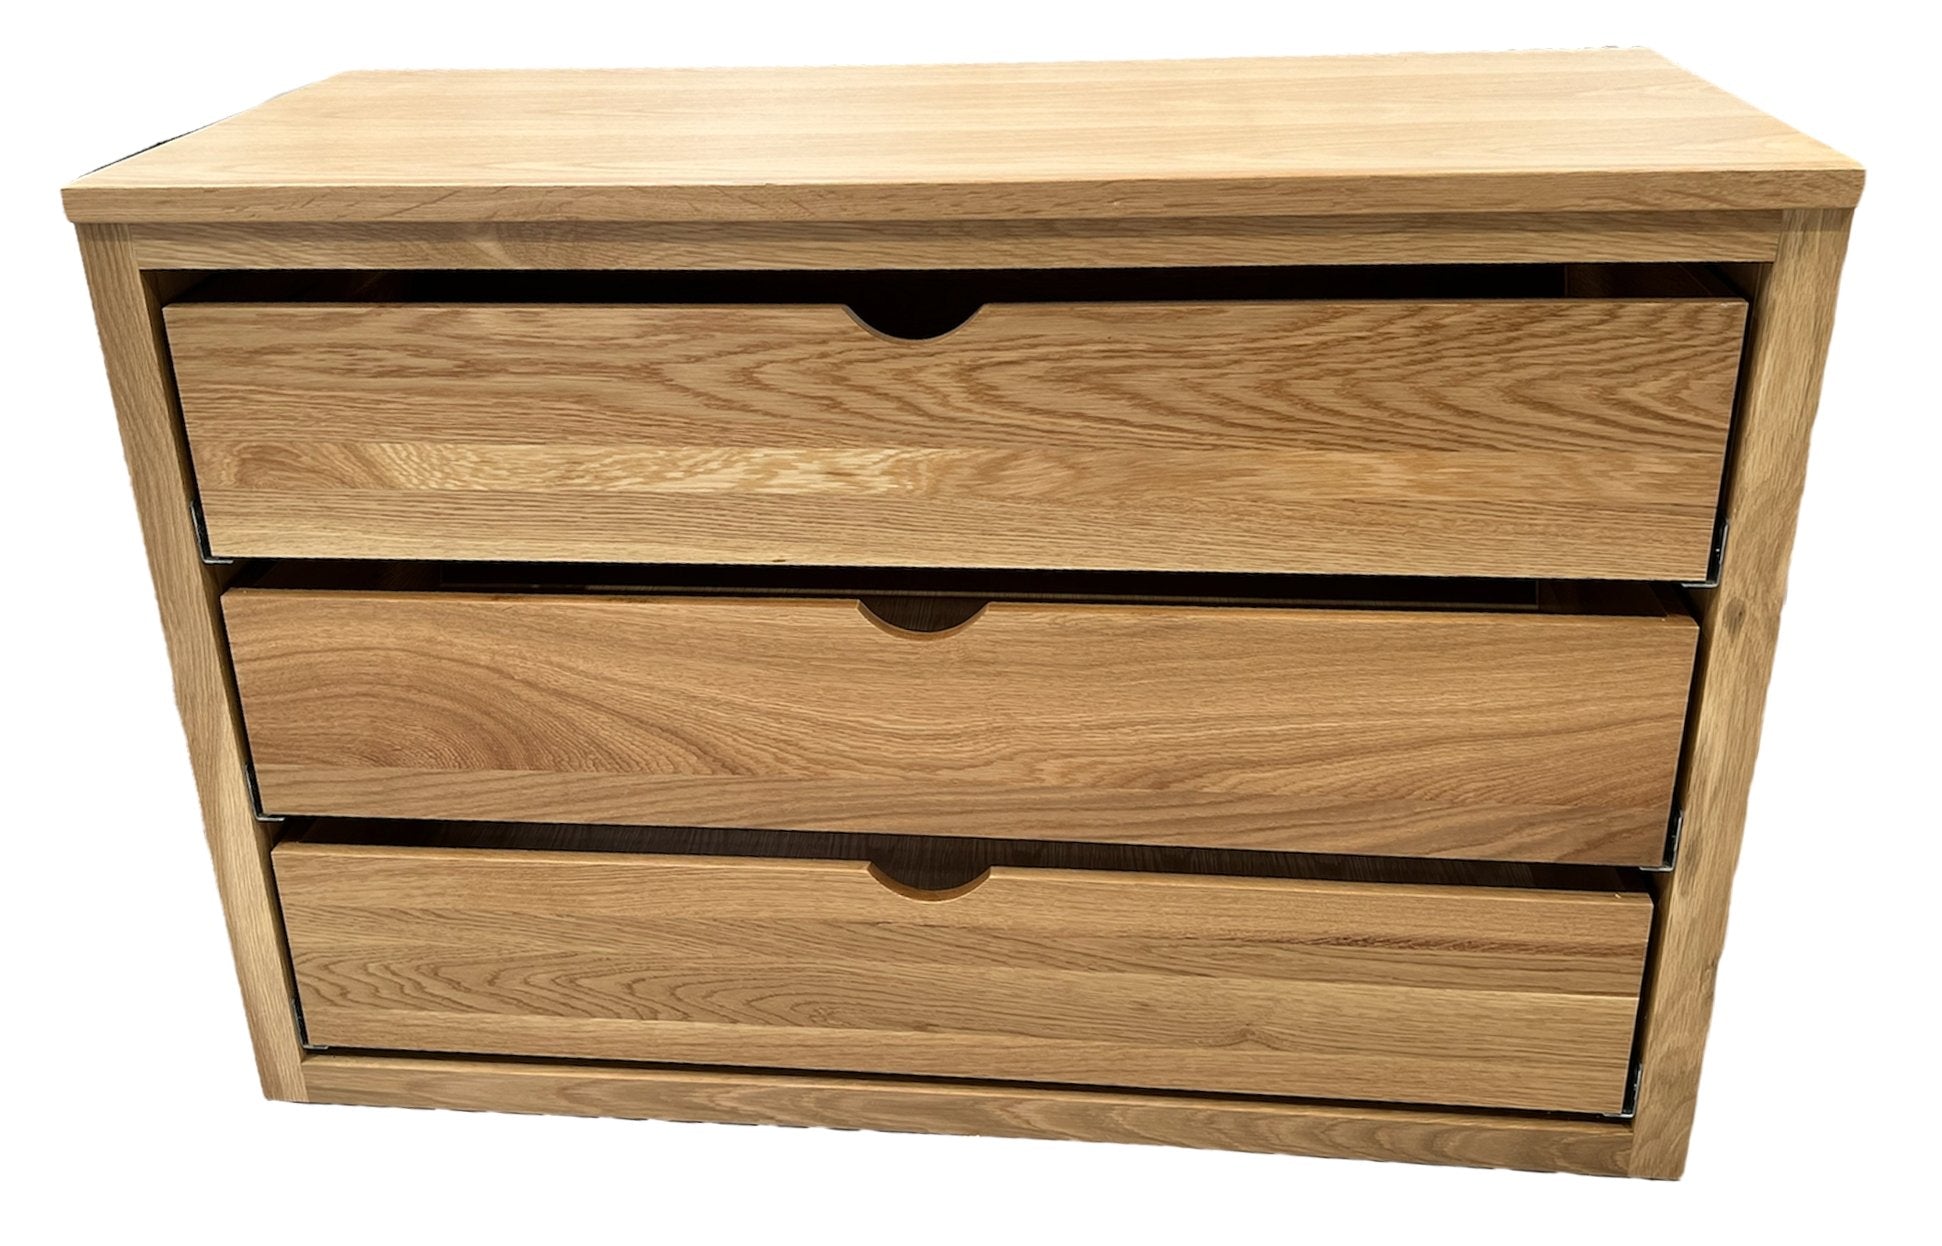 LI 900 - Set of 3 Internal drawers for a 900 larder - Classic Kitchens Direct